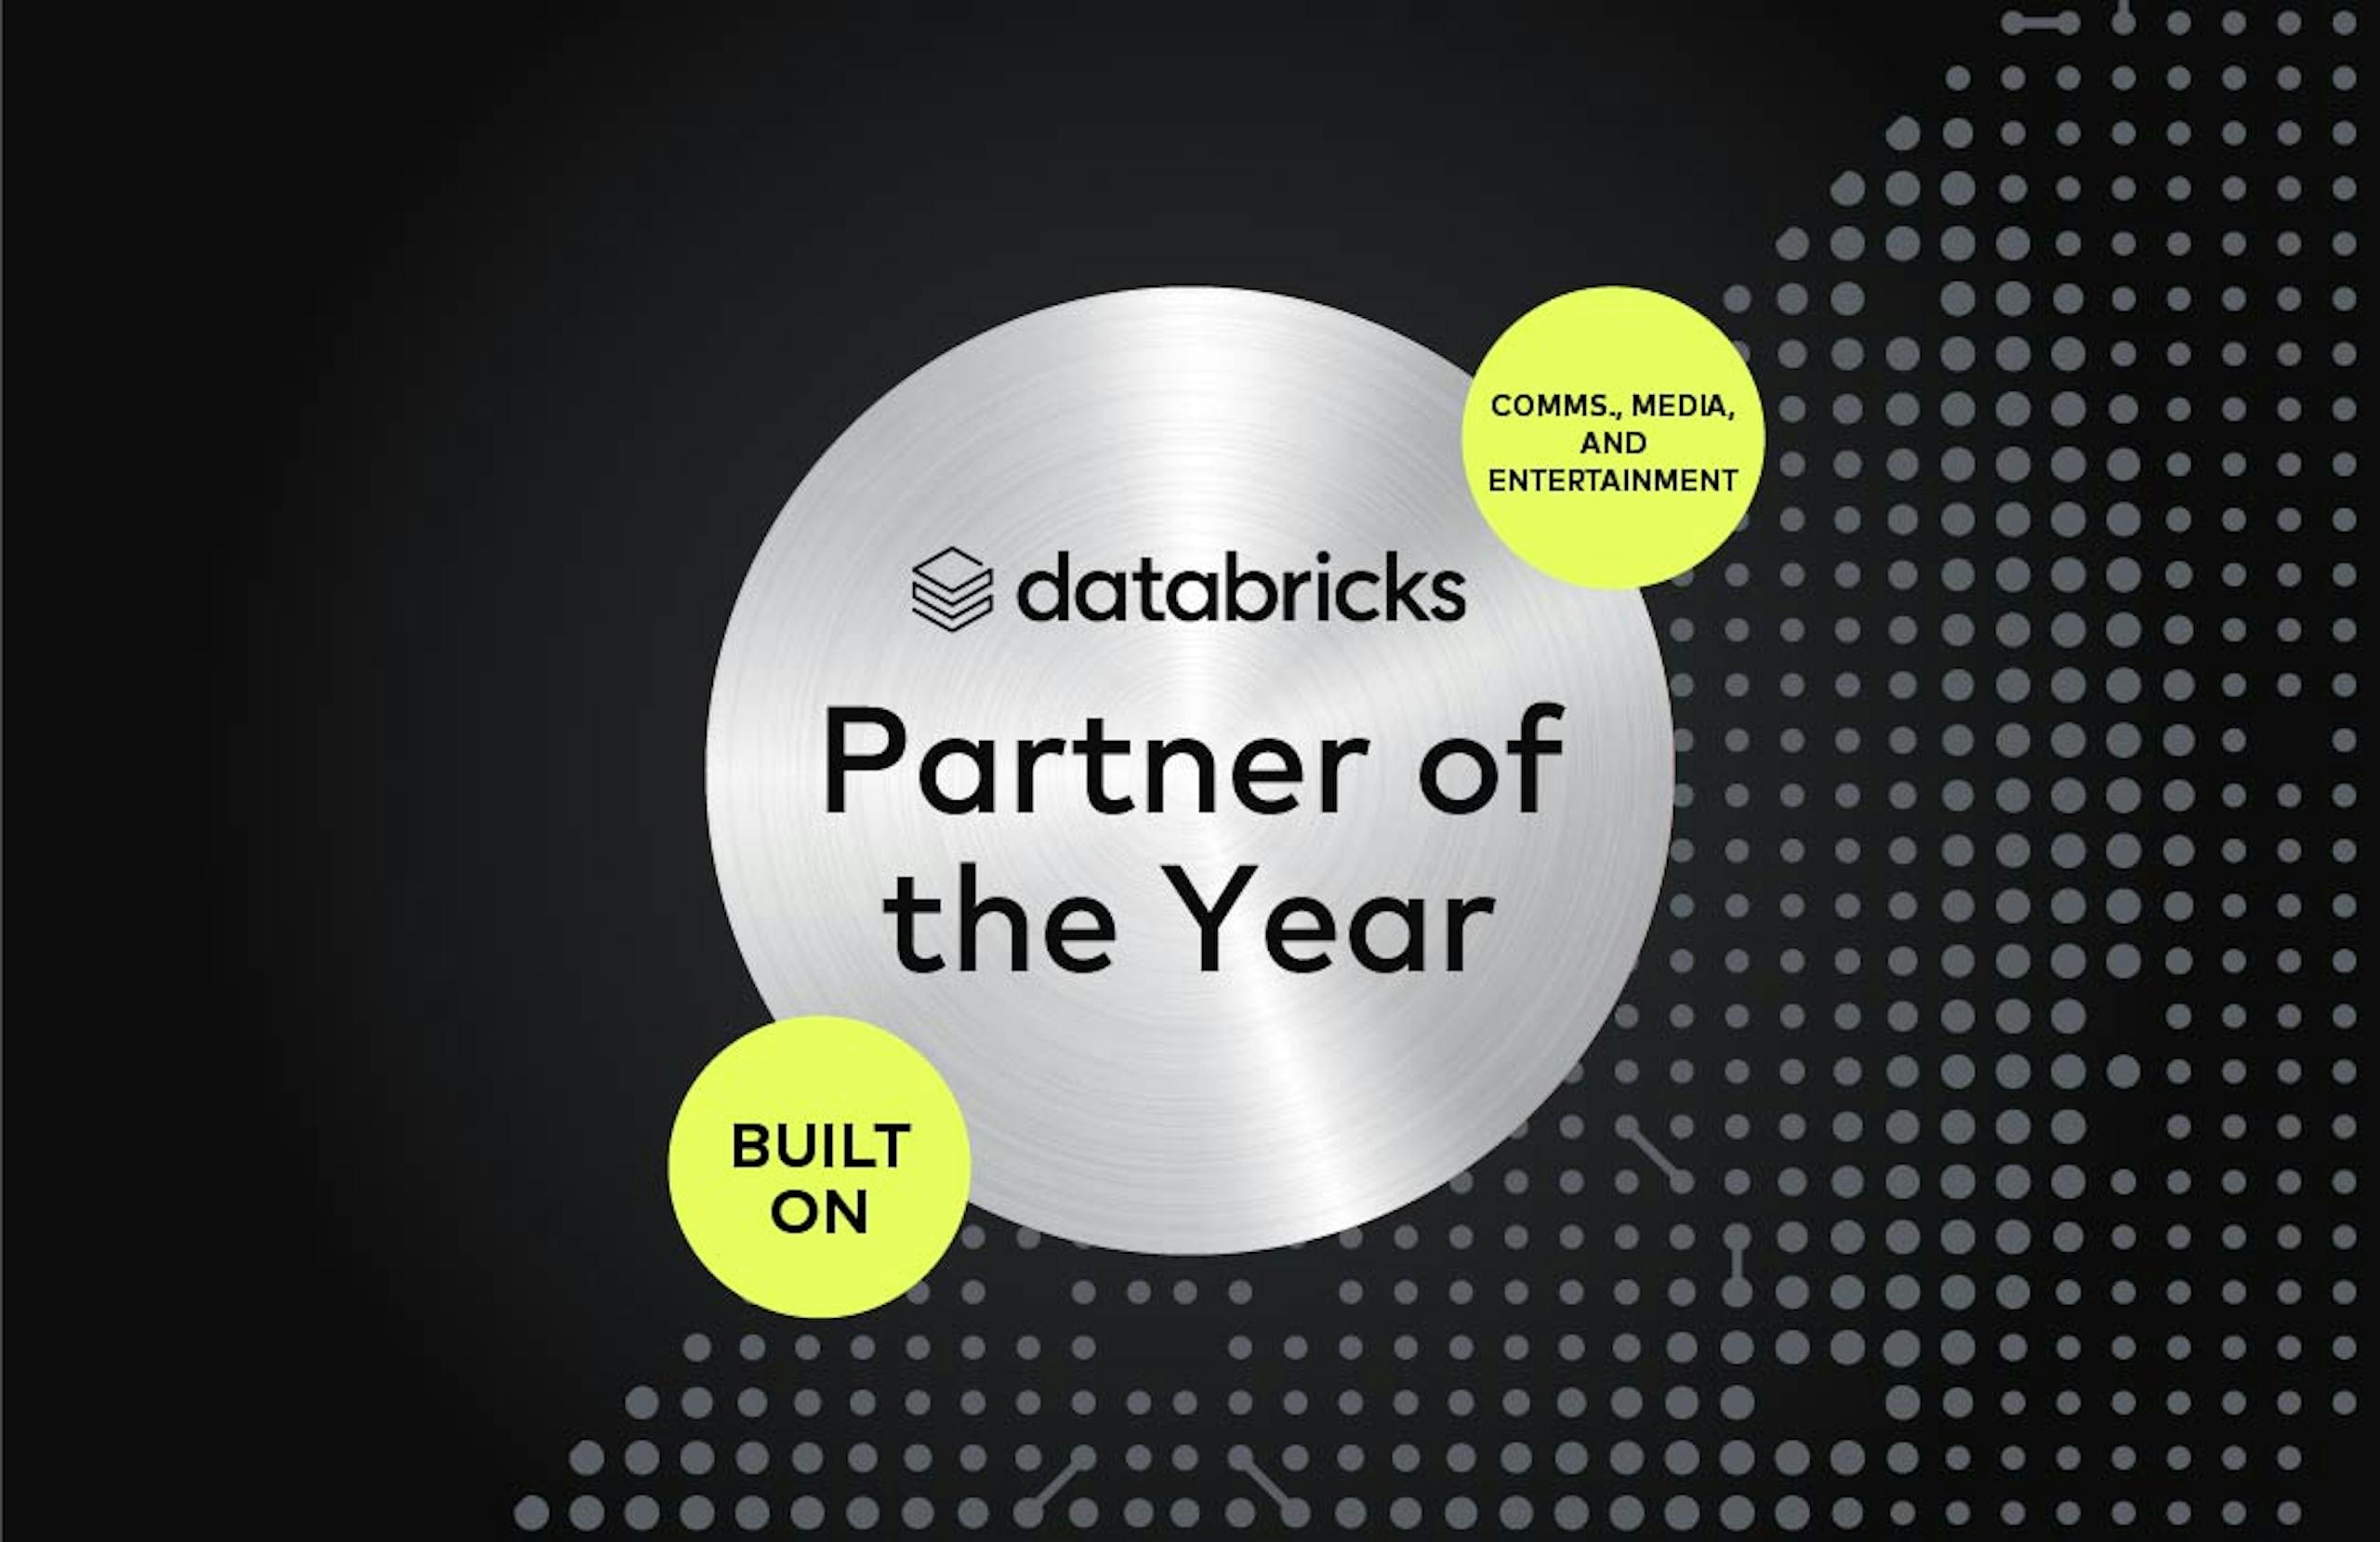 Databricks Partner of the Year awards